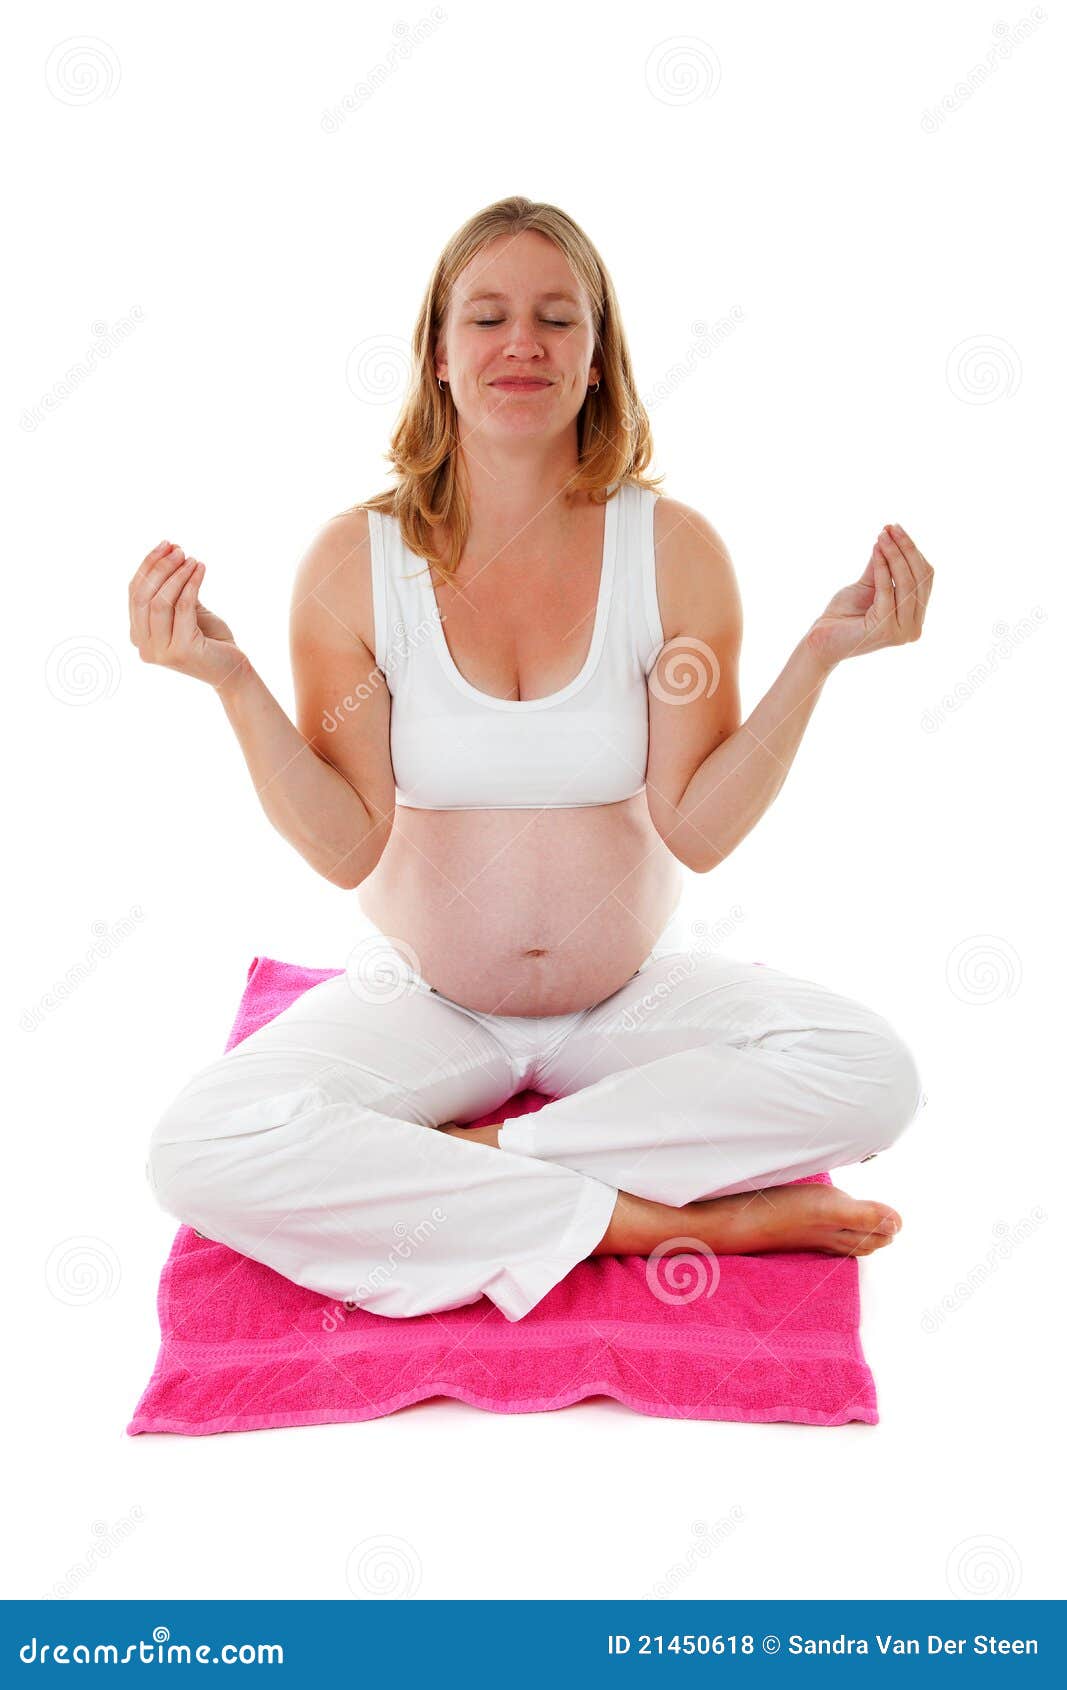 woman doing meditative pregnancy yoga